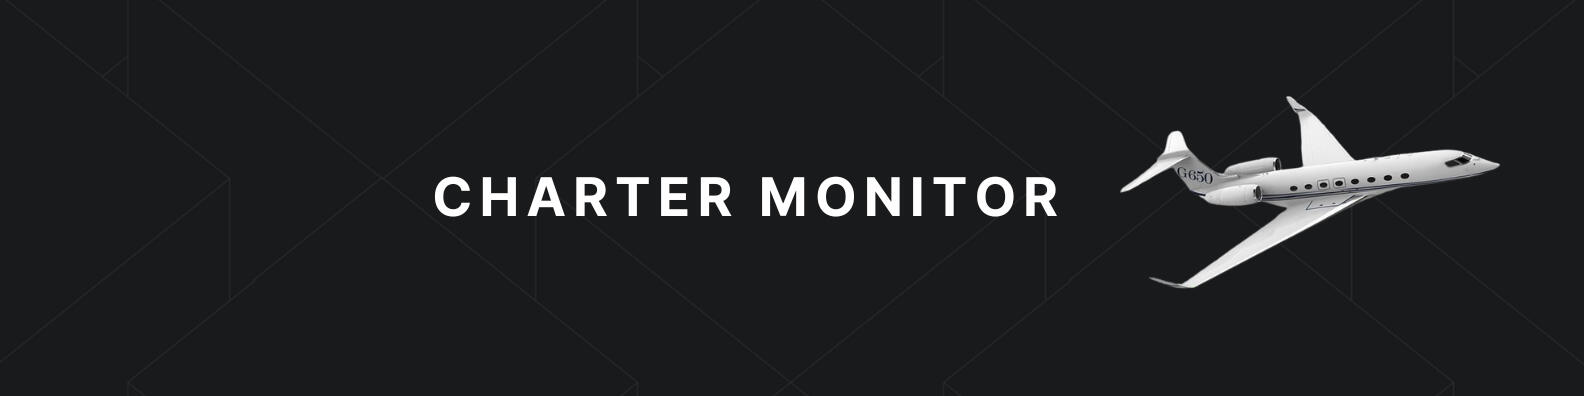 Charter Monitor